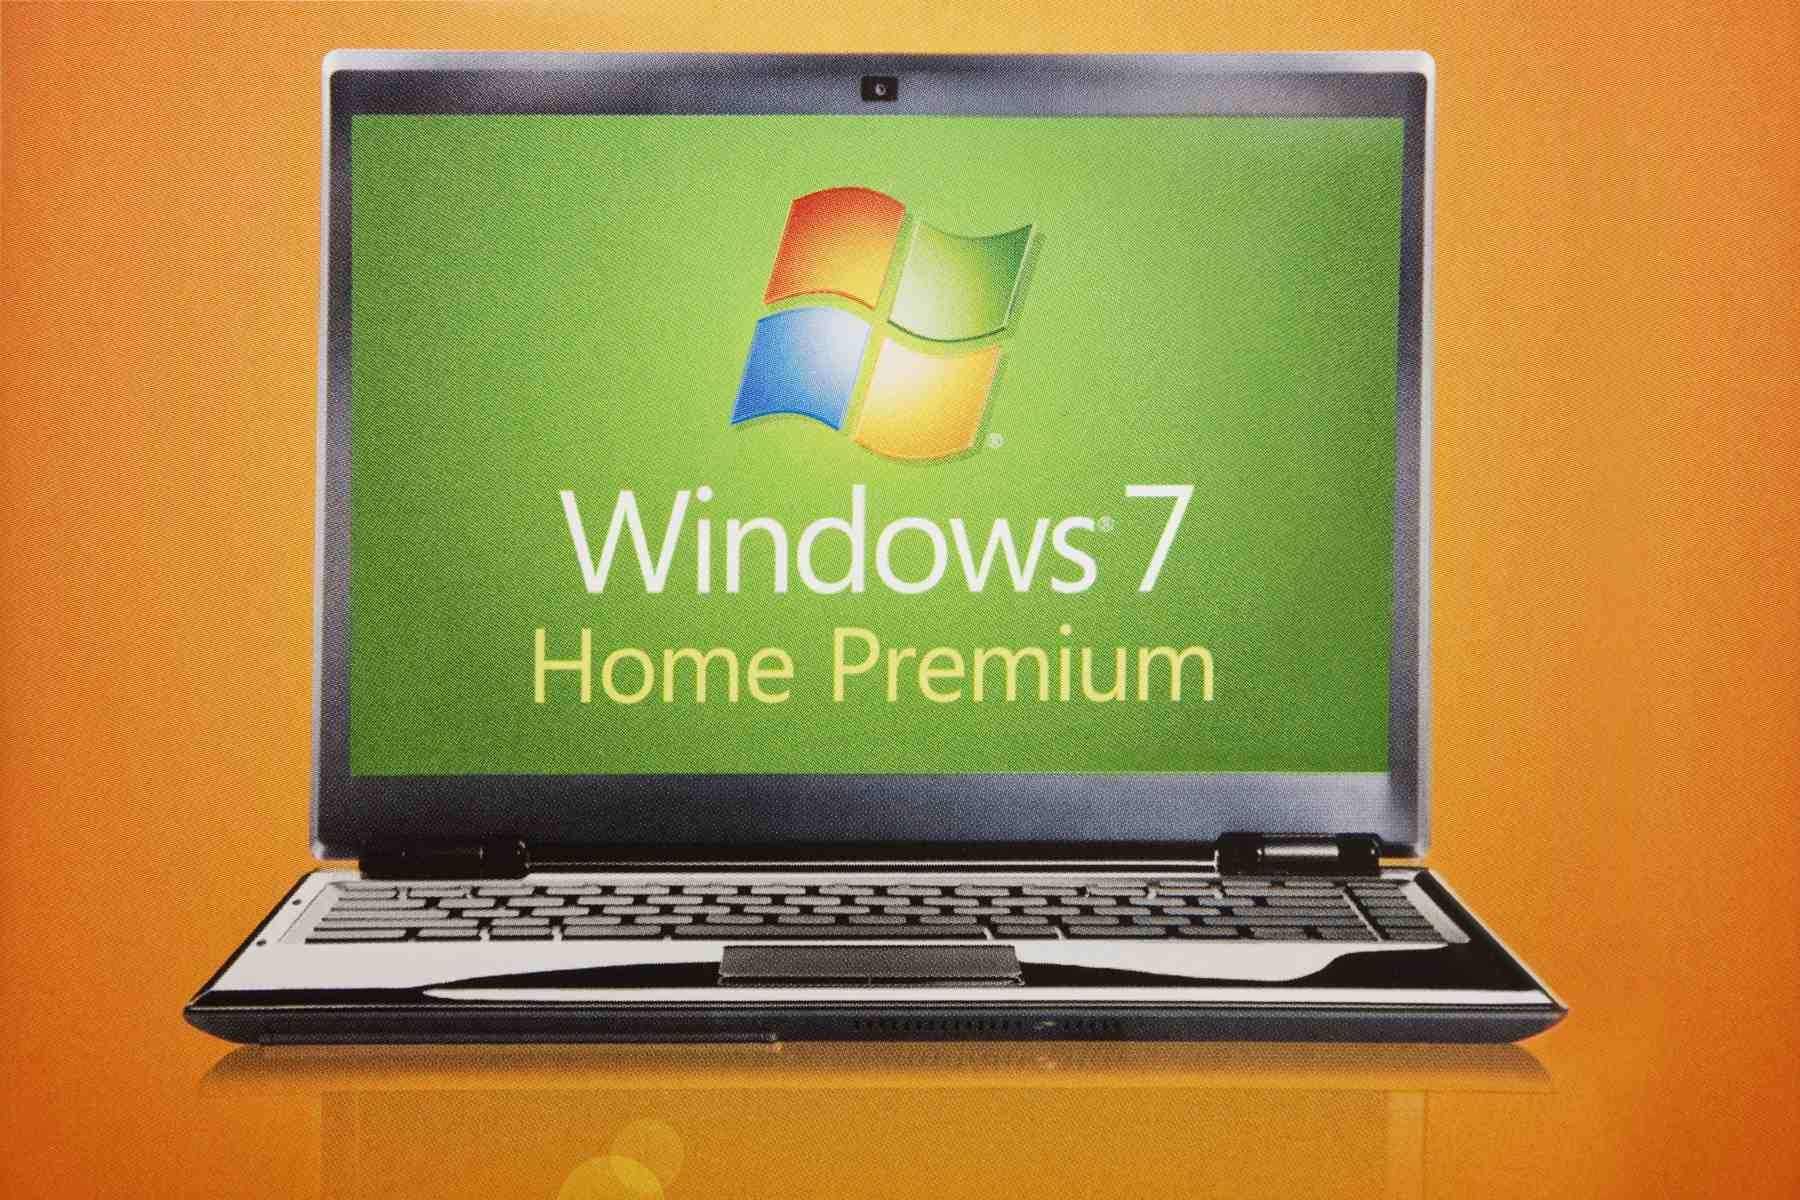 Снимок экрана ноутбука Windows 7.